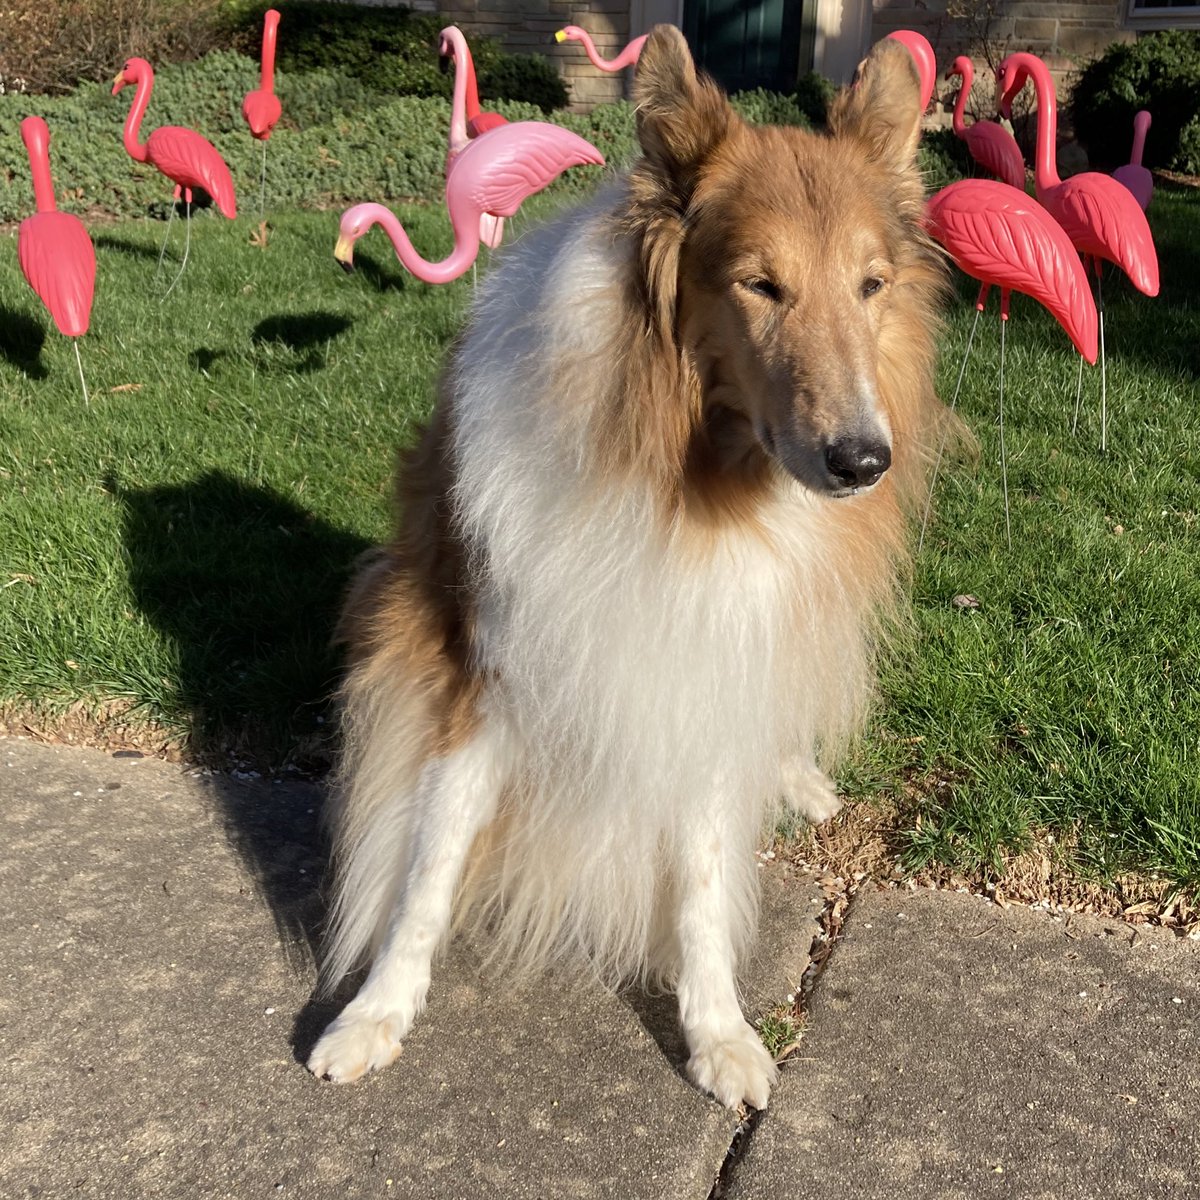 Can flamingos 🦩 fly?  Well this flock has been floating around the neighborhood.  🦩

#pinkflamingo #youvebeenflocked #flockofflamingos #pinkflamingos #plasticpinkflamingos #roughcollie #collie #beautifuldayintheneighborhood